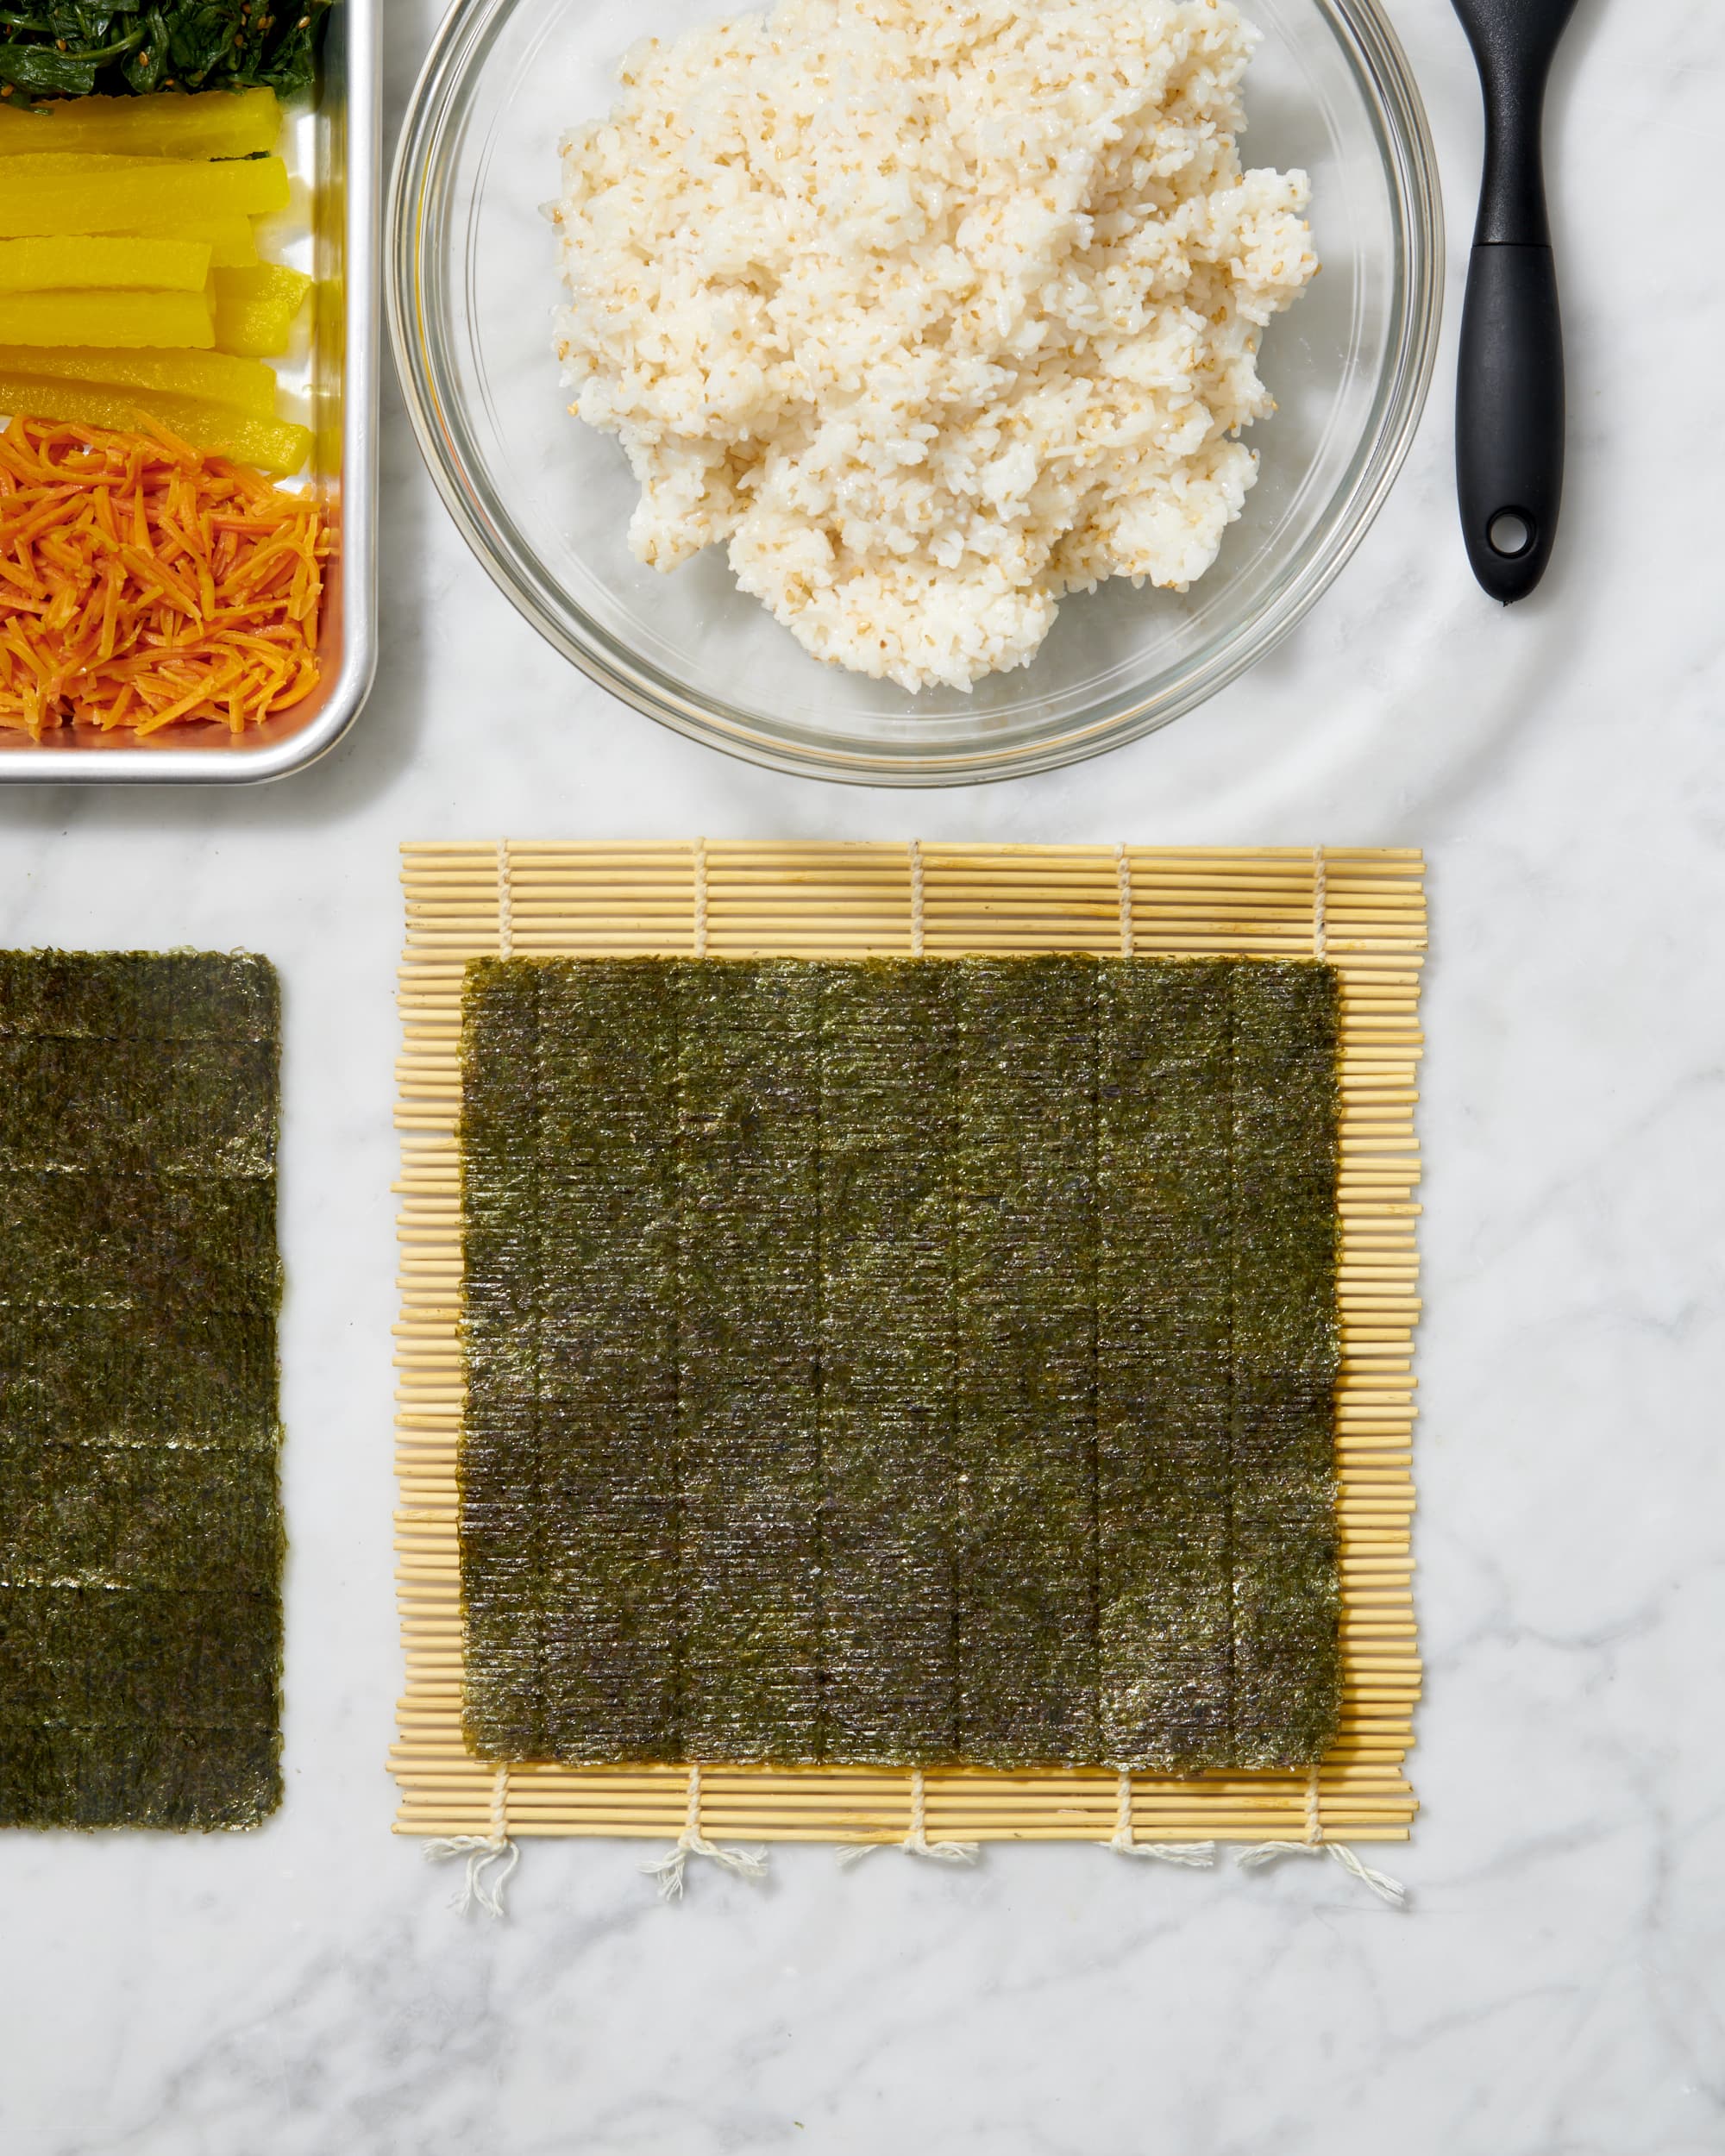 Kimbap (Korean Seaweed Rice Roll) - Plant-Based Matters